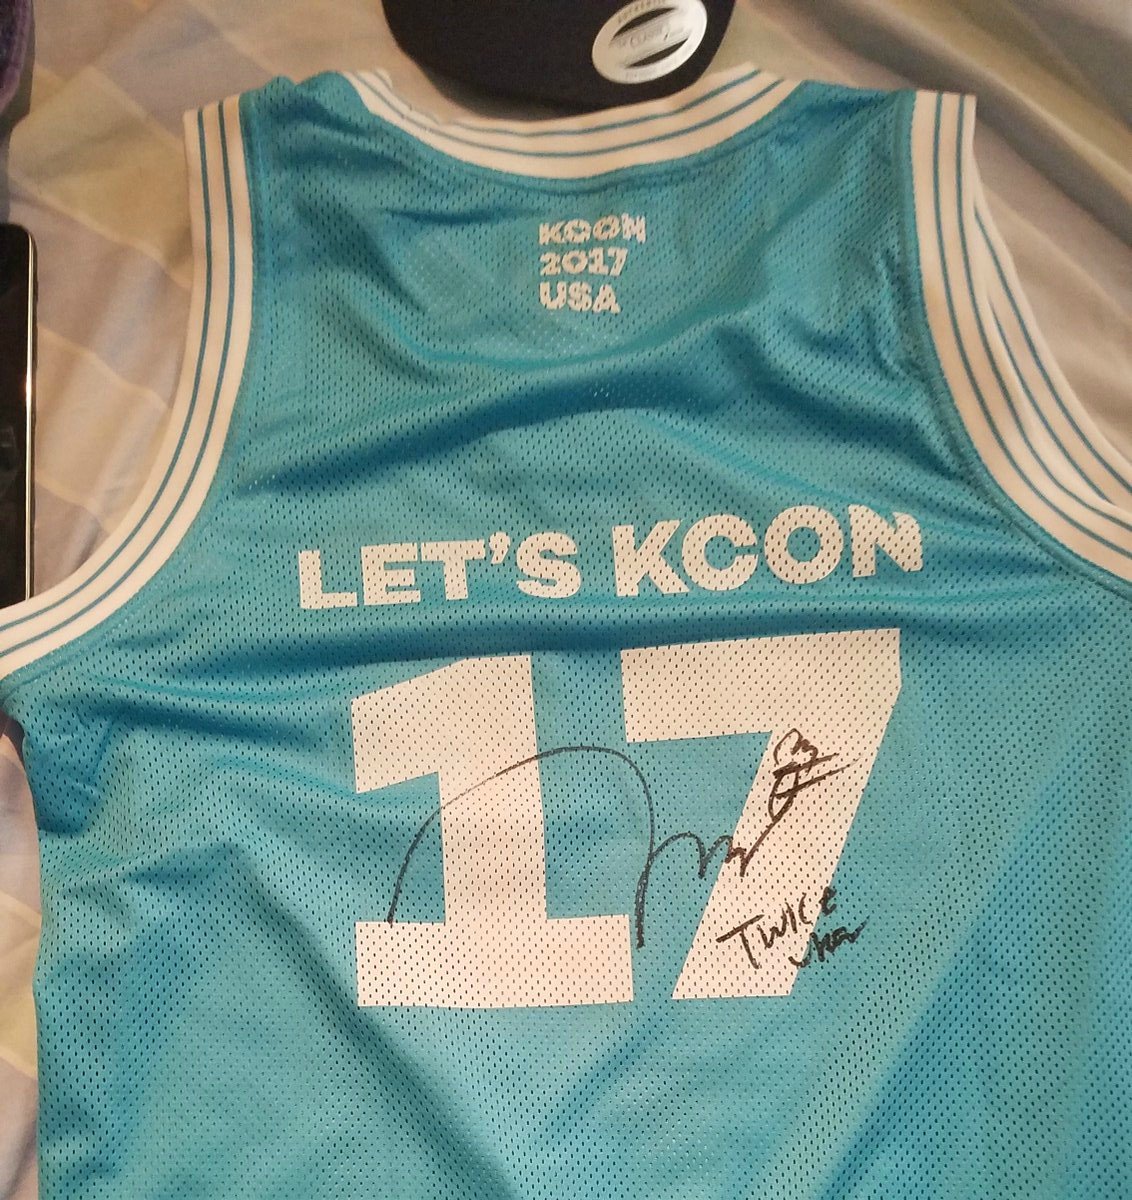 KCON 2017 NY Twice Merchandise